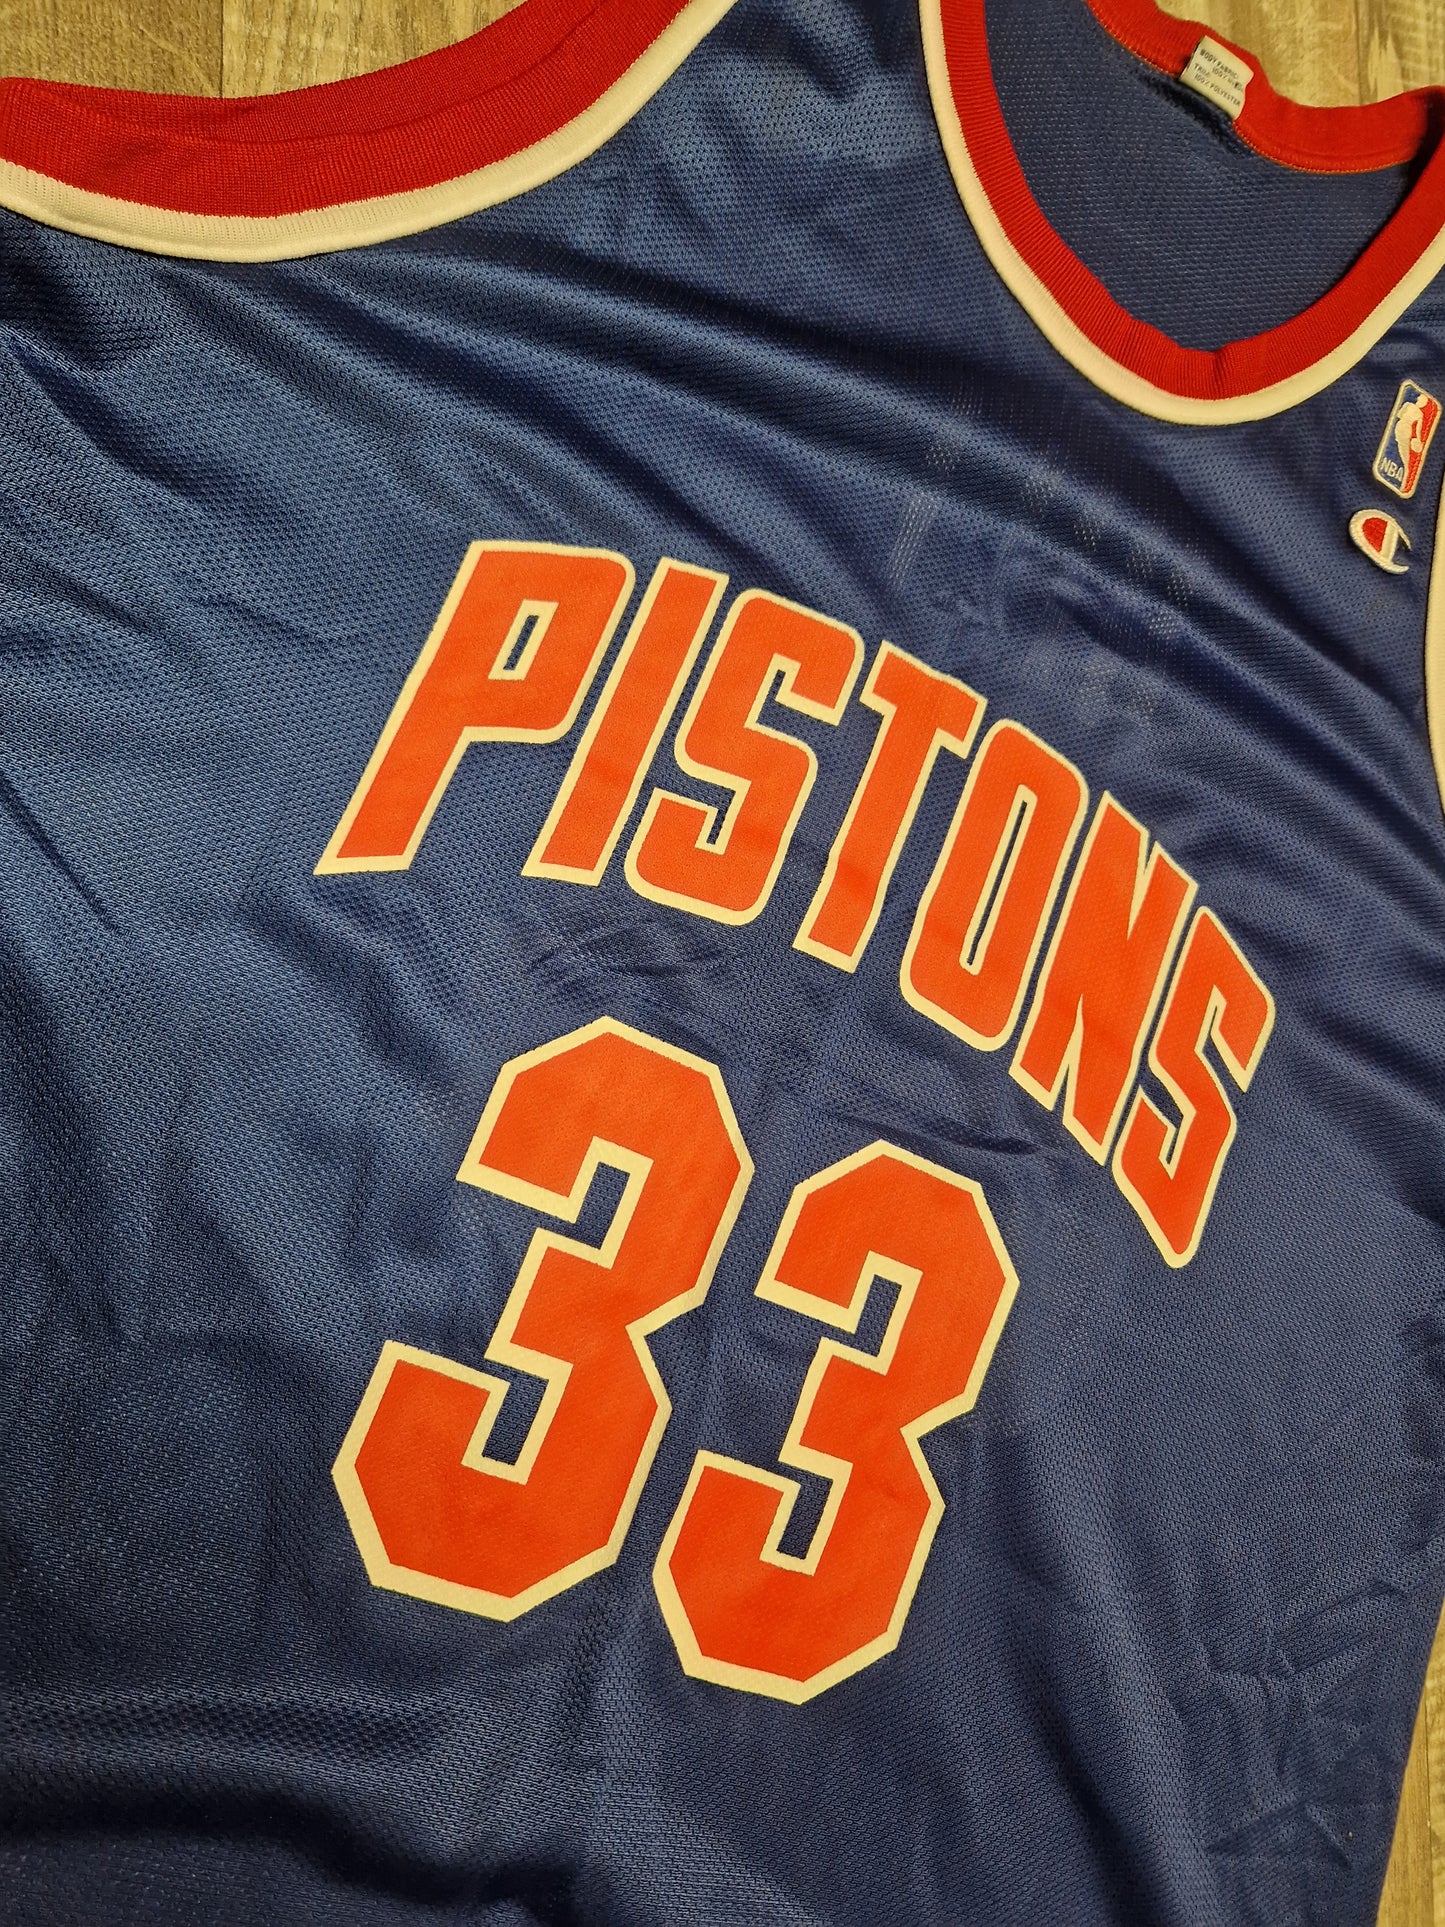 Grant Hill Detroit Pistons Jersey Size XL